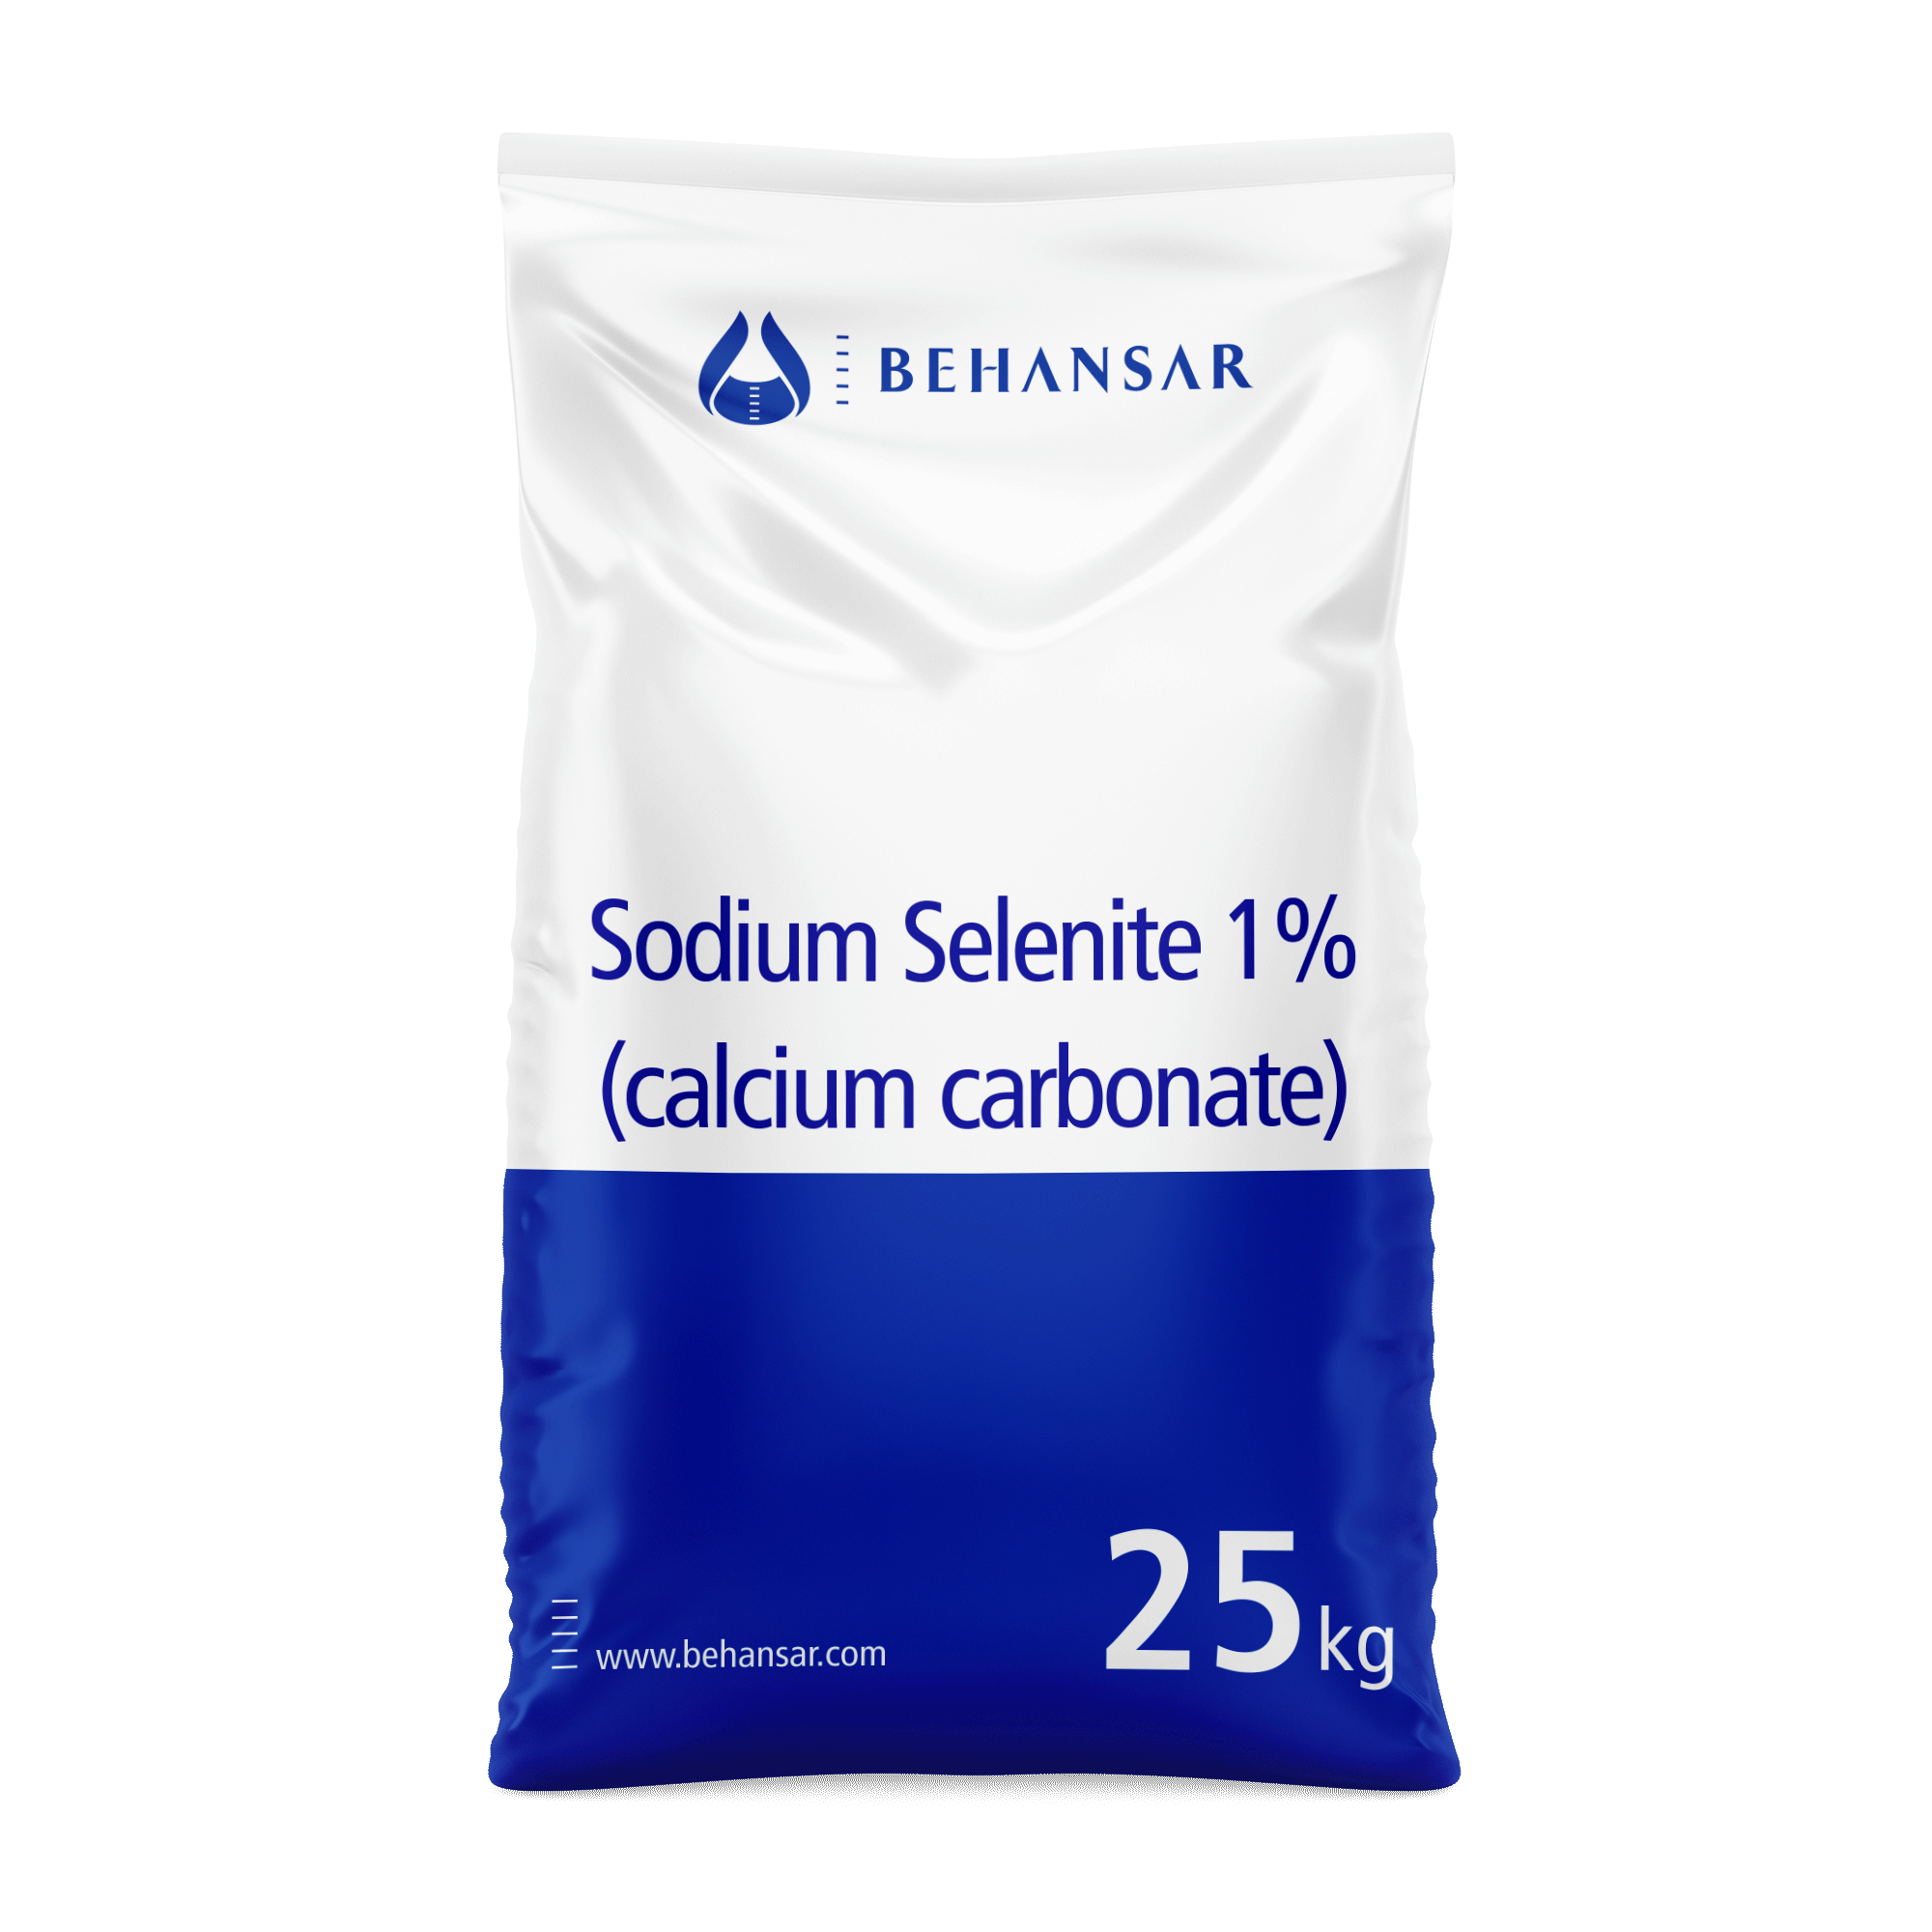 Sodium Selenite 1% (calcium carbonate) is one of the products of Behansar Co